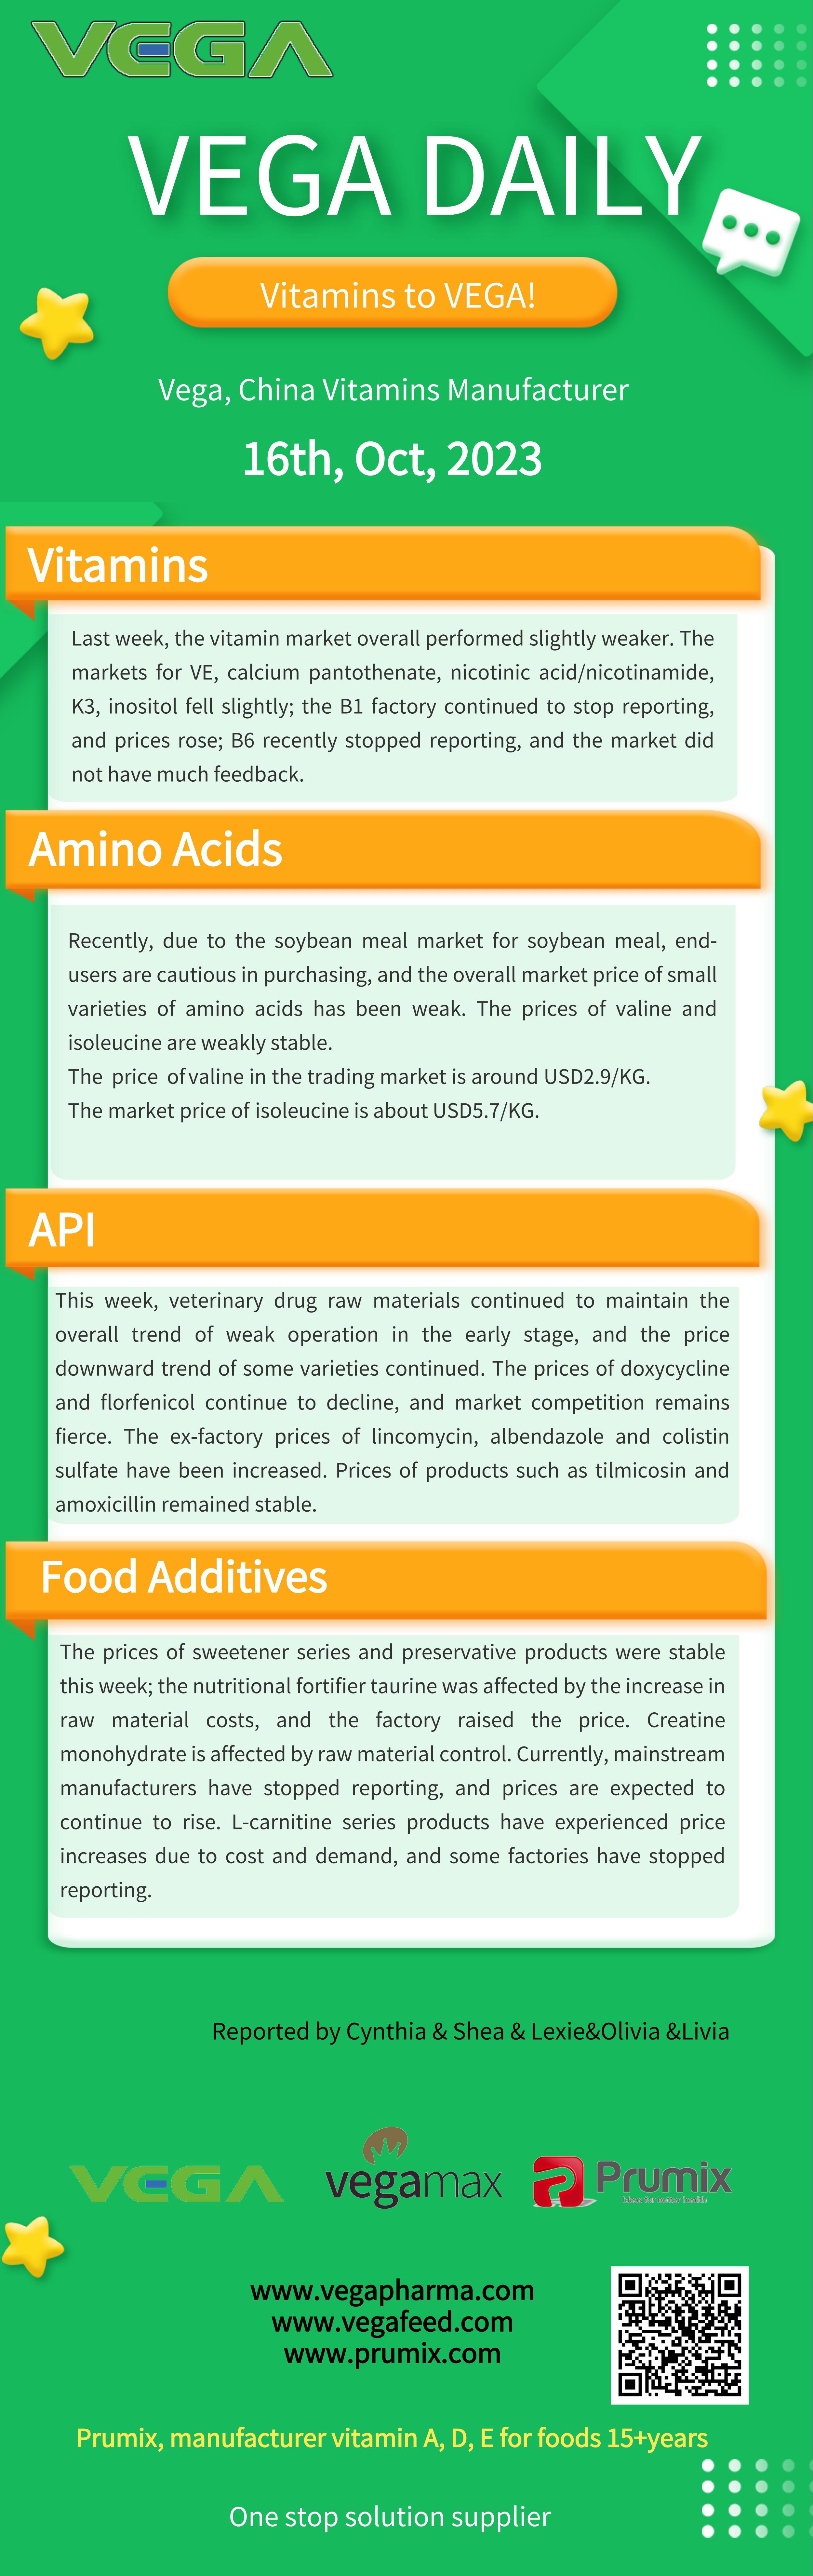 Vega Daily Dated on Oct 16th 2023 Vitamin  Amino Acid API Food Additives.jpg